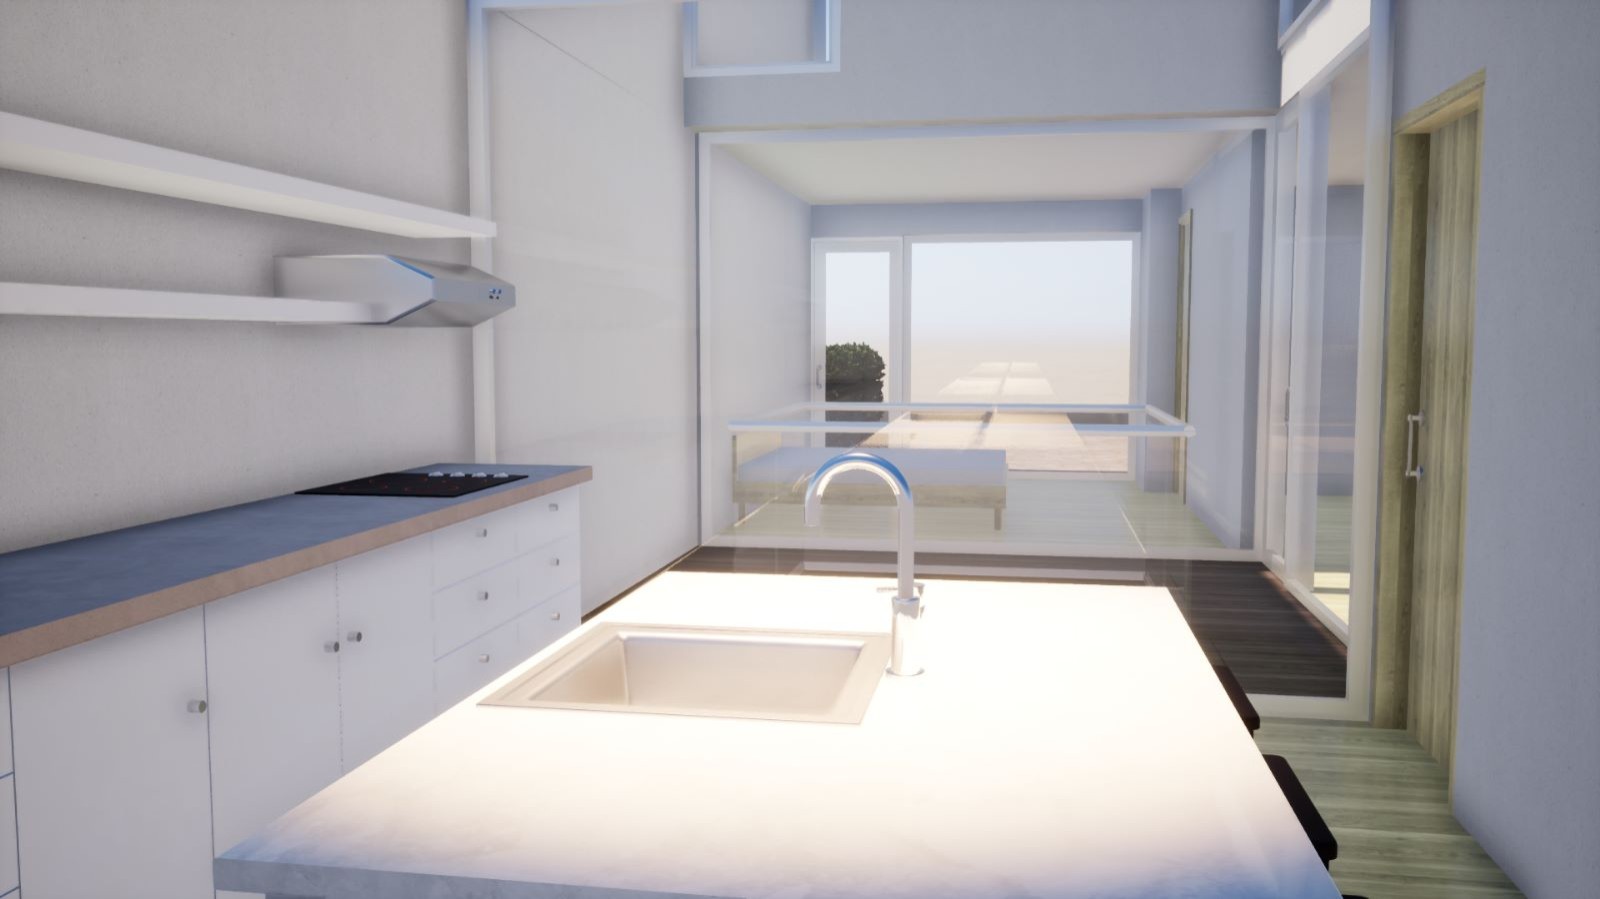 4 bedroom villa, new construction with seaview, for sale in Tavira, Algarve_228030